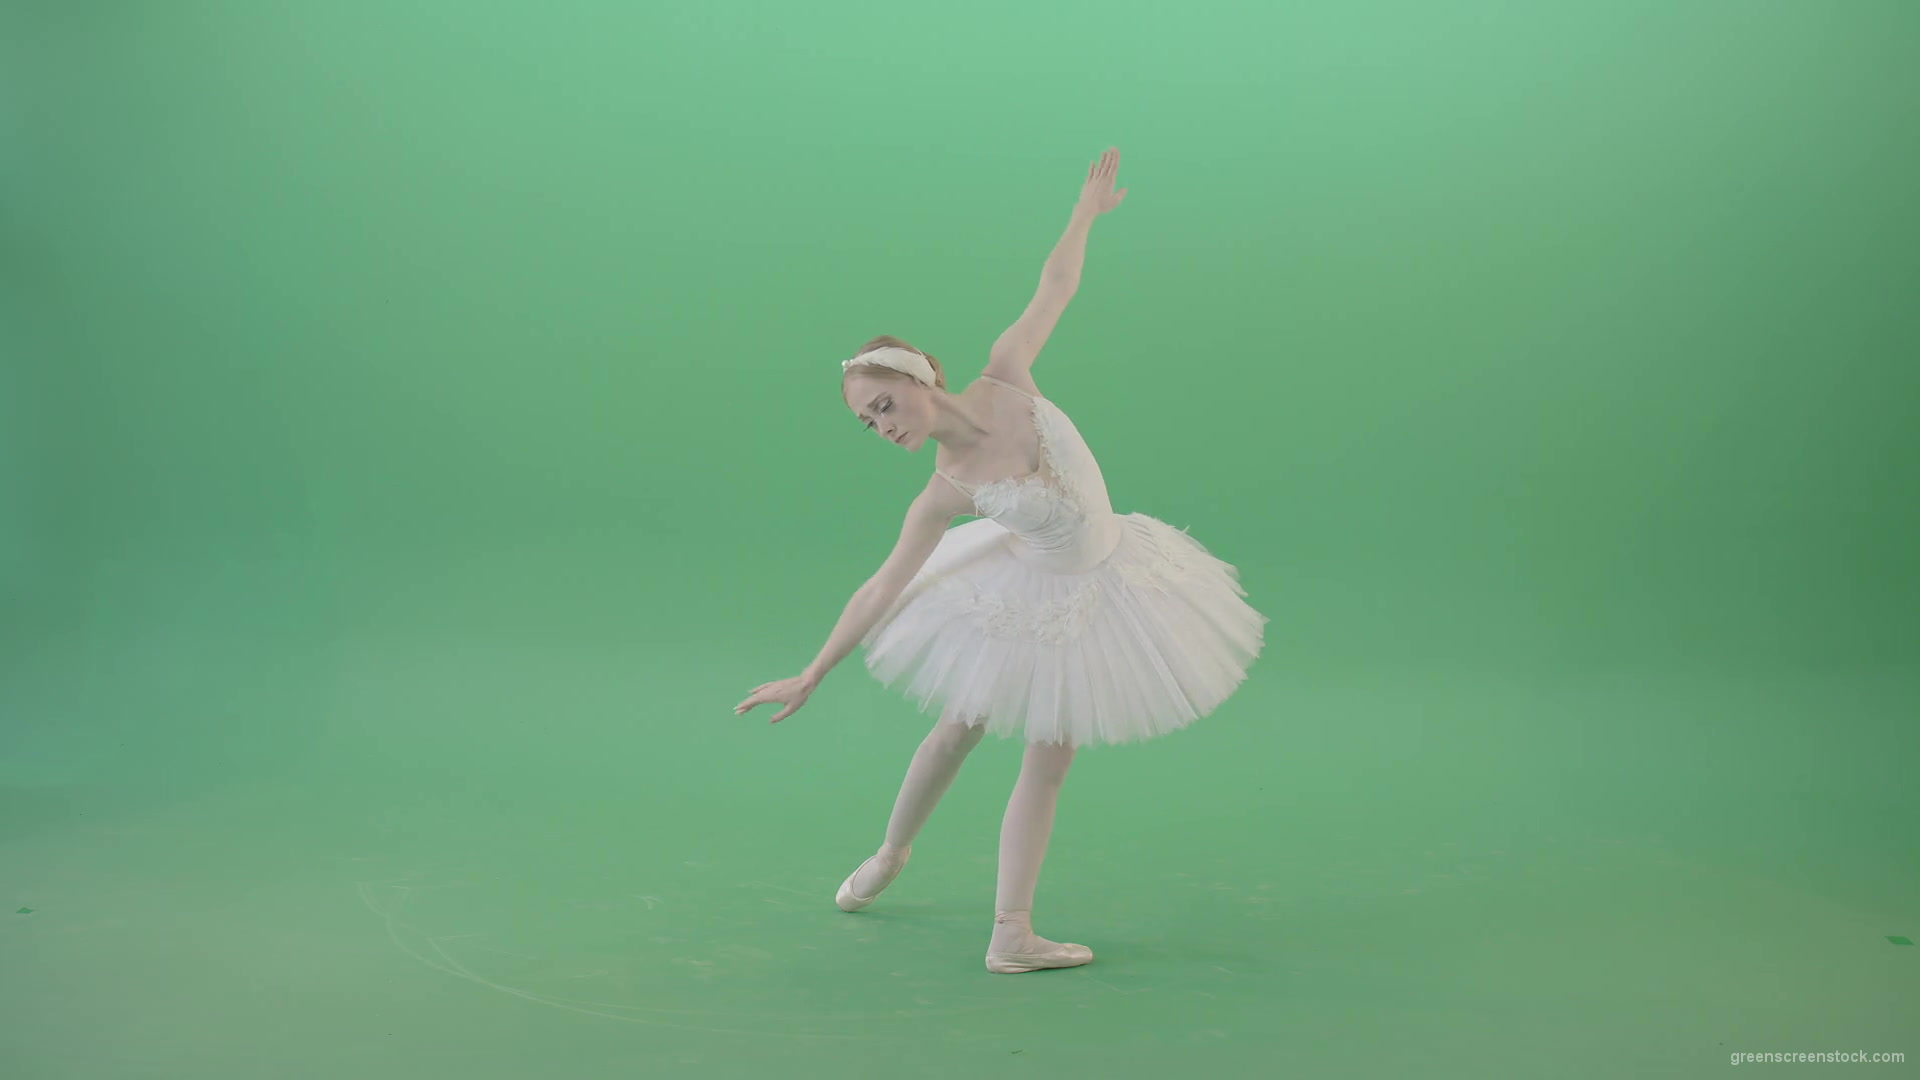 Elegant-snowwhite-ballet-dancer-ballerina-dancing-isolated-on-Green-Screen-4K-Video-Footage-1920_008 Green Screen Stock